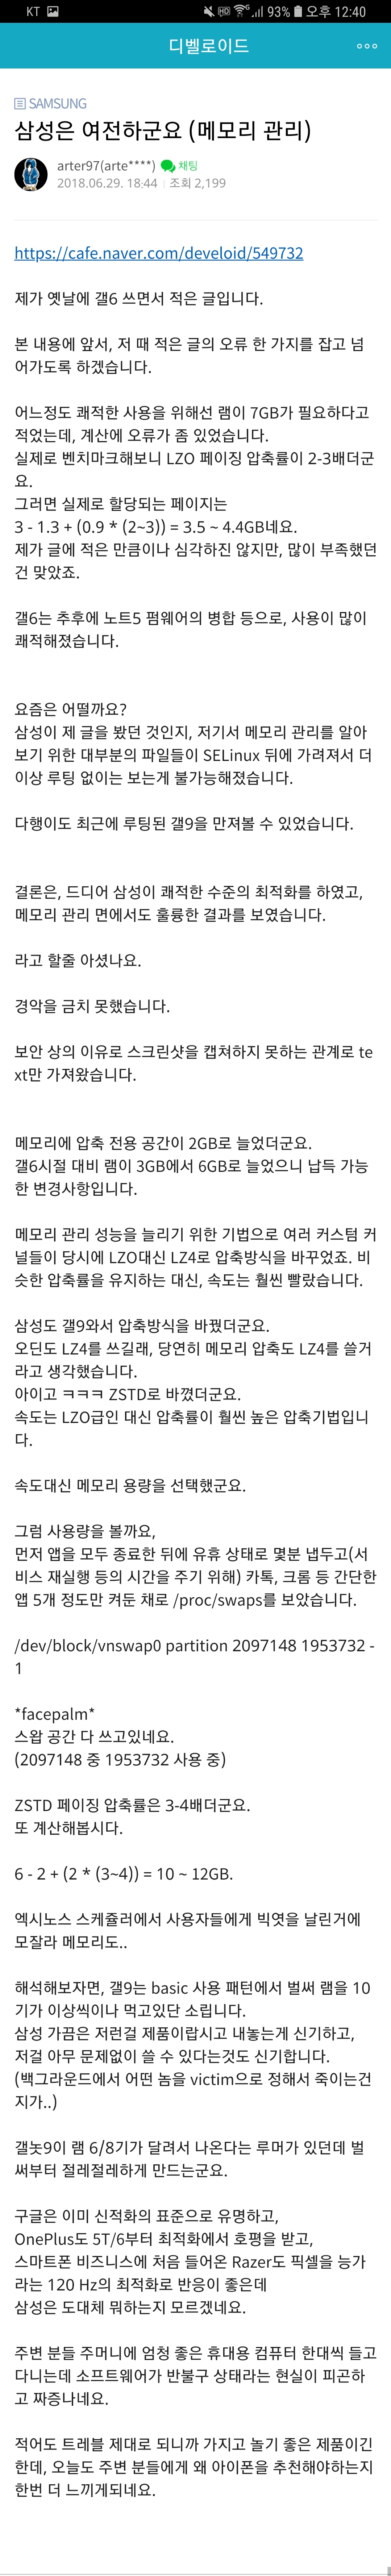 Screenshot_20180820_124035_Naver_Cafe.jpg